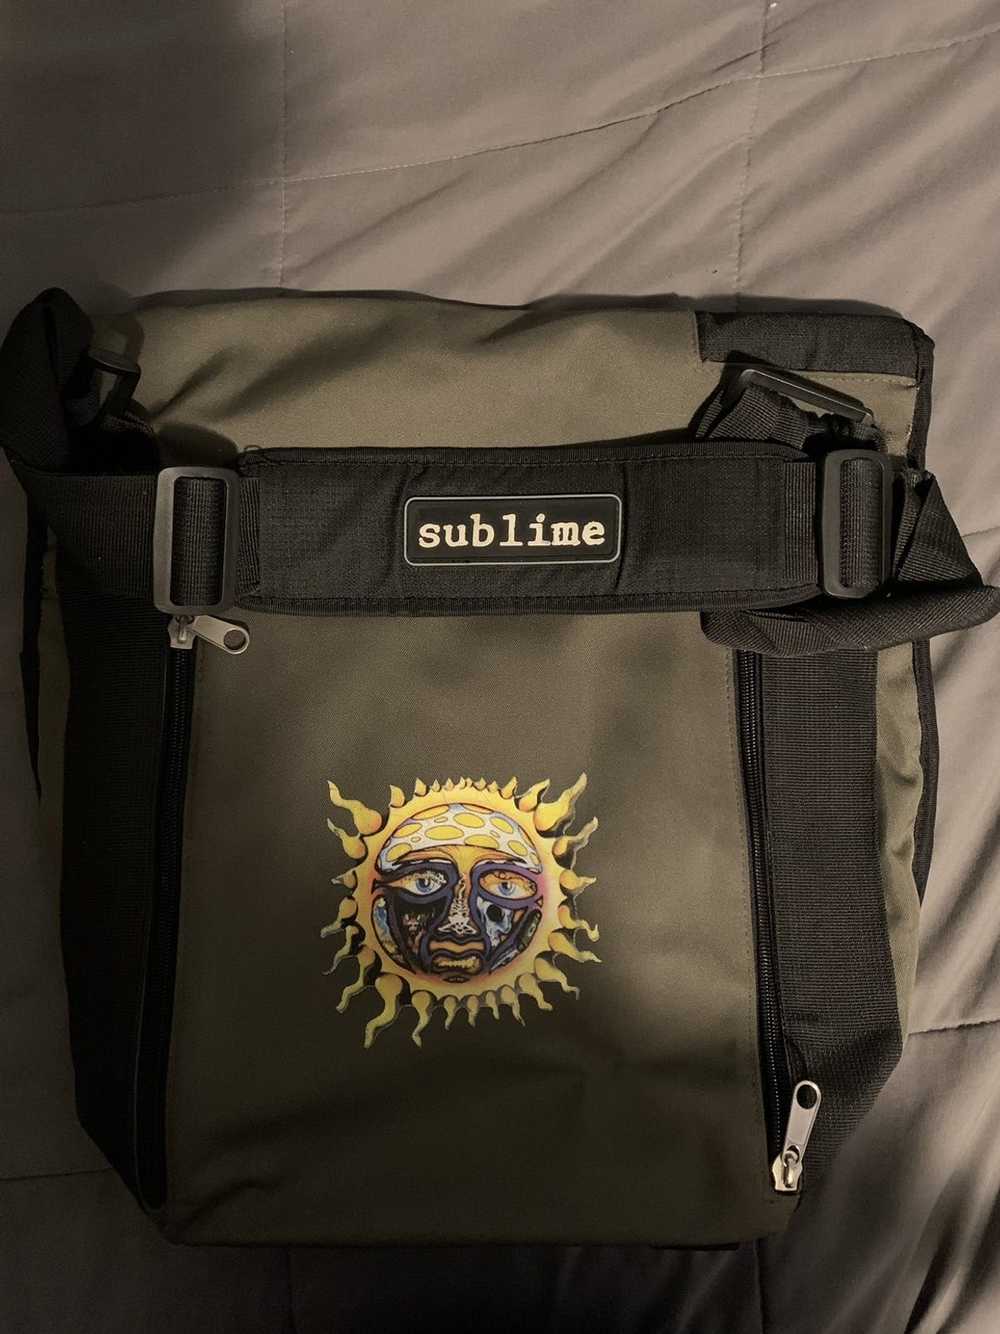 Sublime Sublime messenger bag - image 3